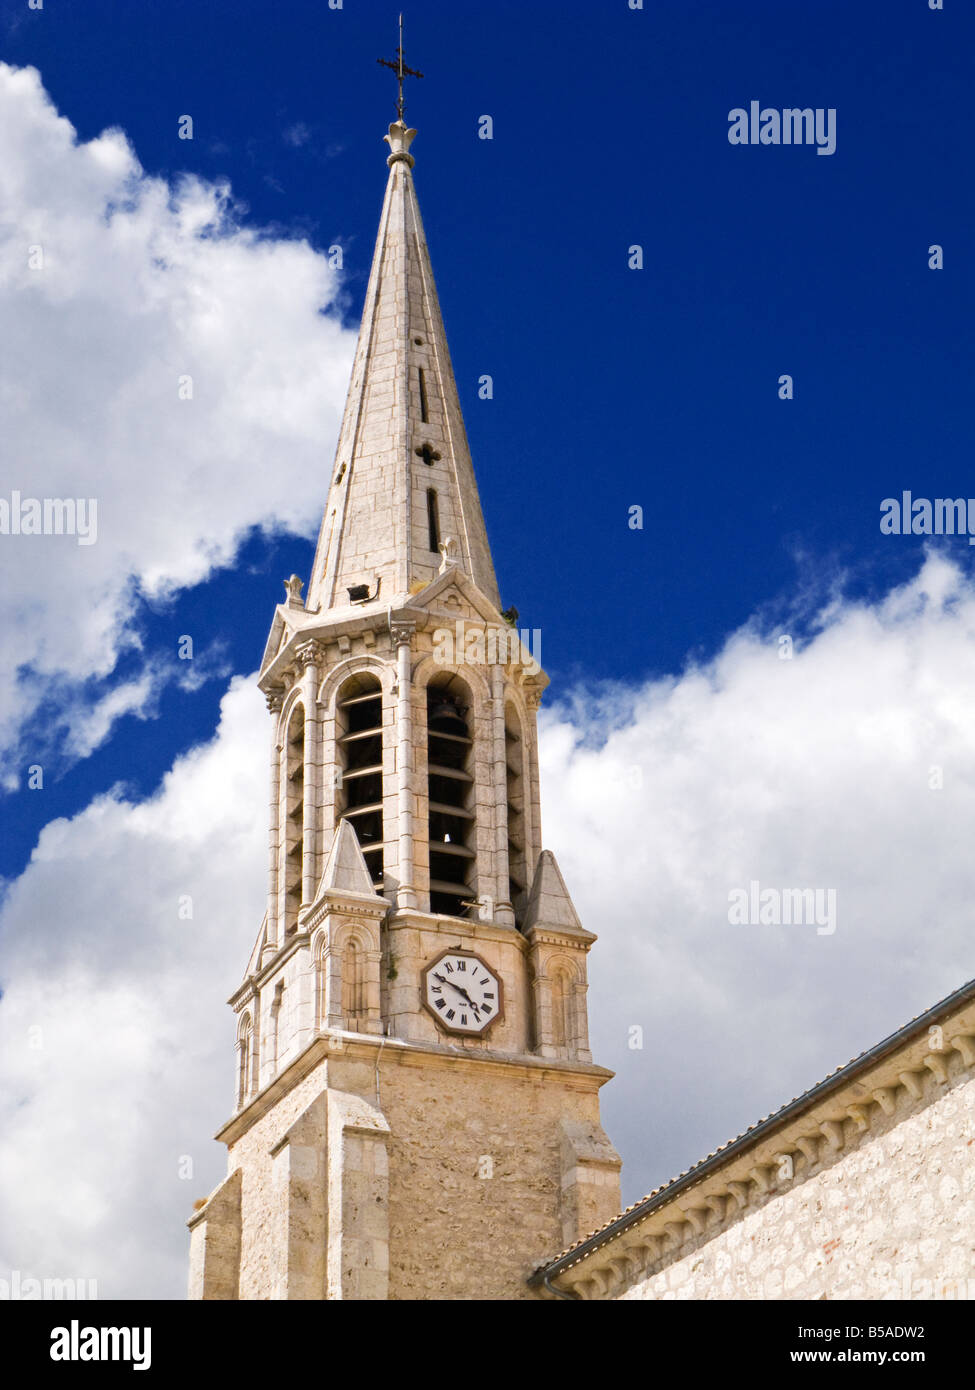 Kirche Kirchturm Bell Tower und Uhr, Frankreich, Europa Stockfoto